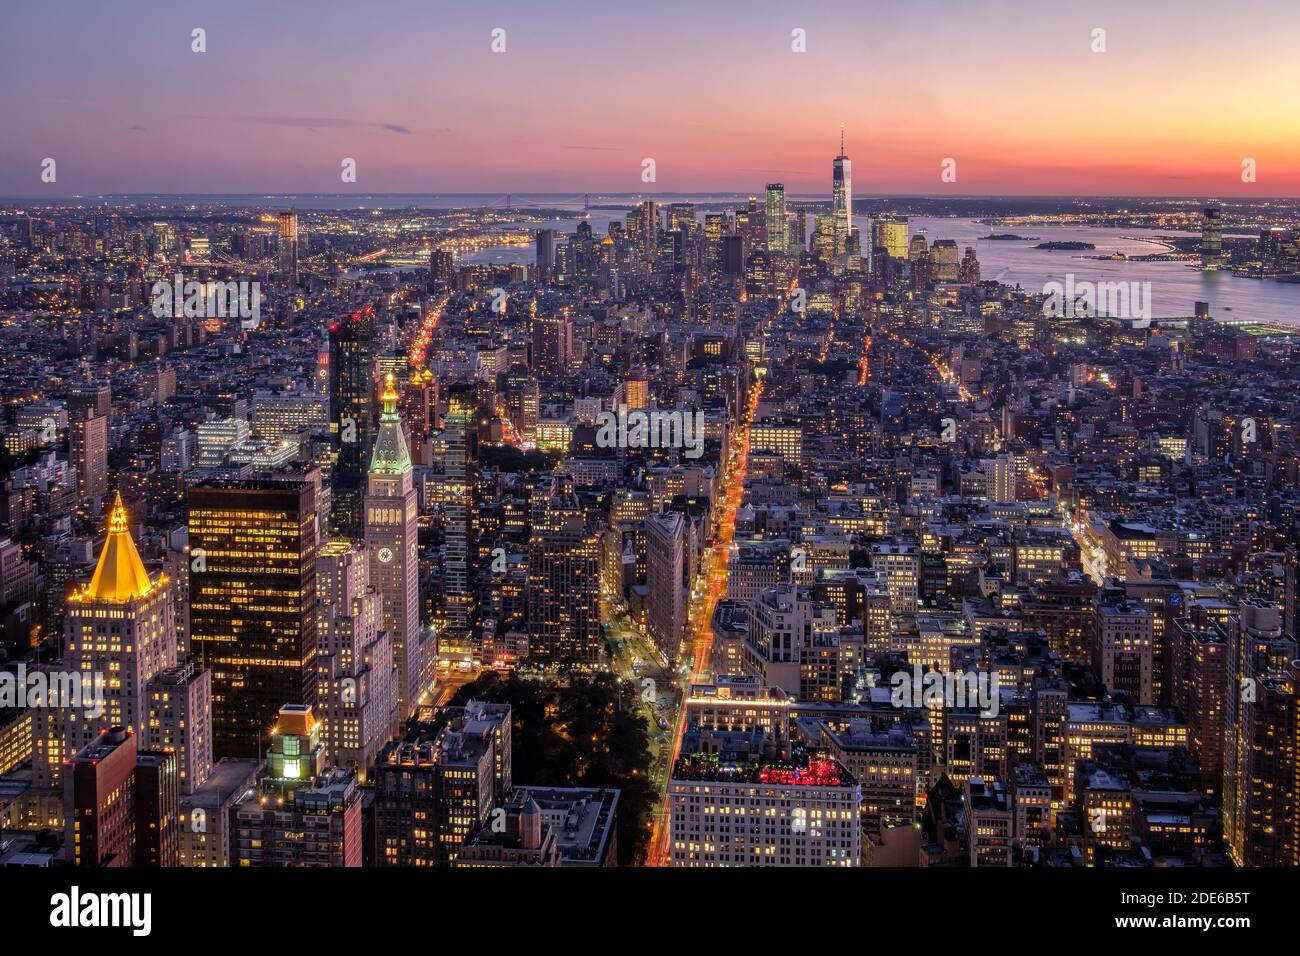 Panorama of Manhattan skyline at night with an illuminated 1 World Trade Center in New York, USA Stock Photo